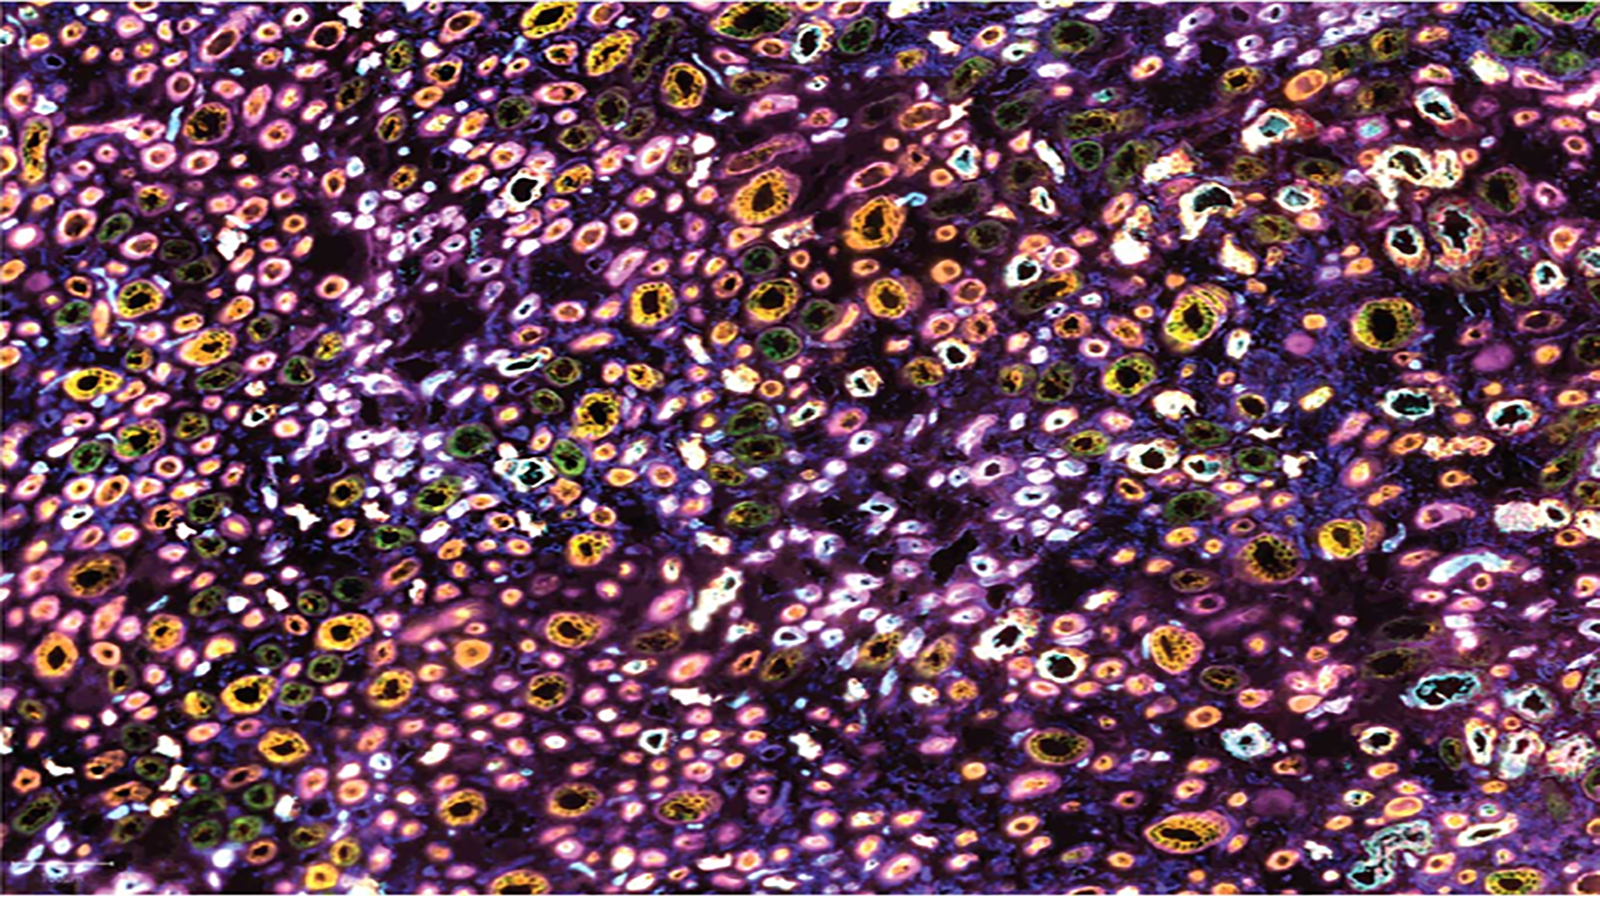 CODEX image of human kidney medulla, from Dr. Elizabeth Neumann at Vanderbilt